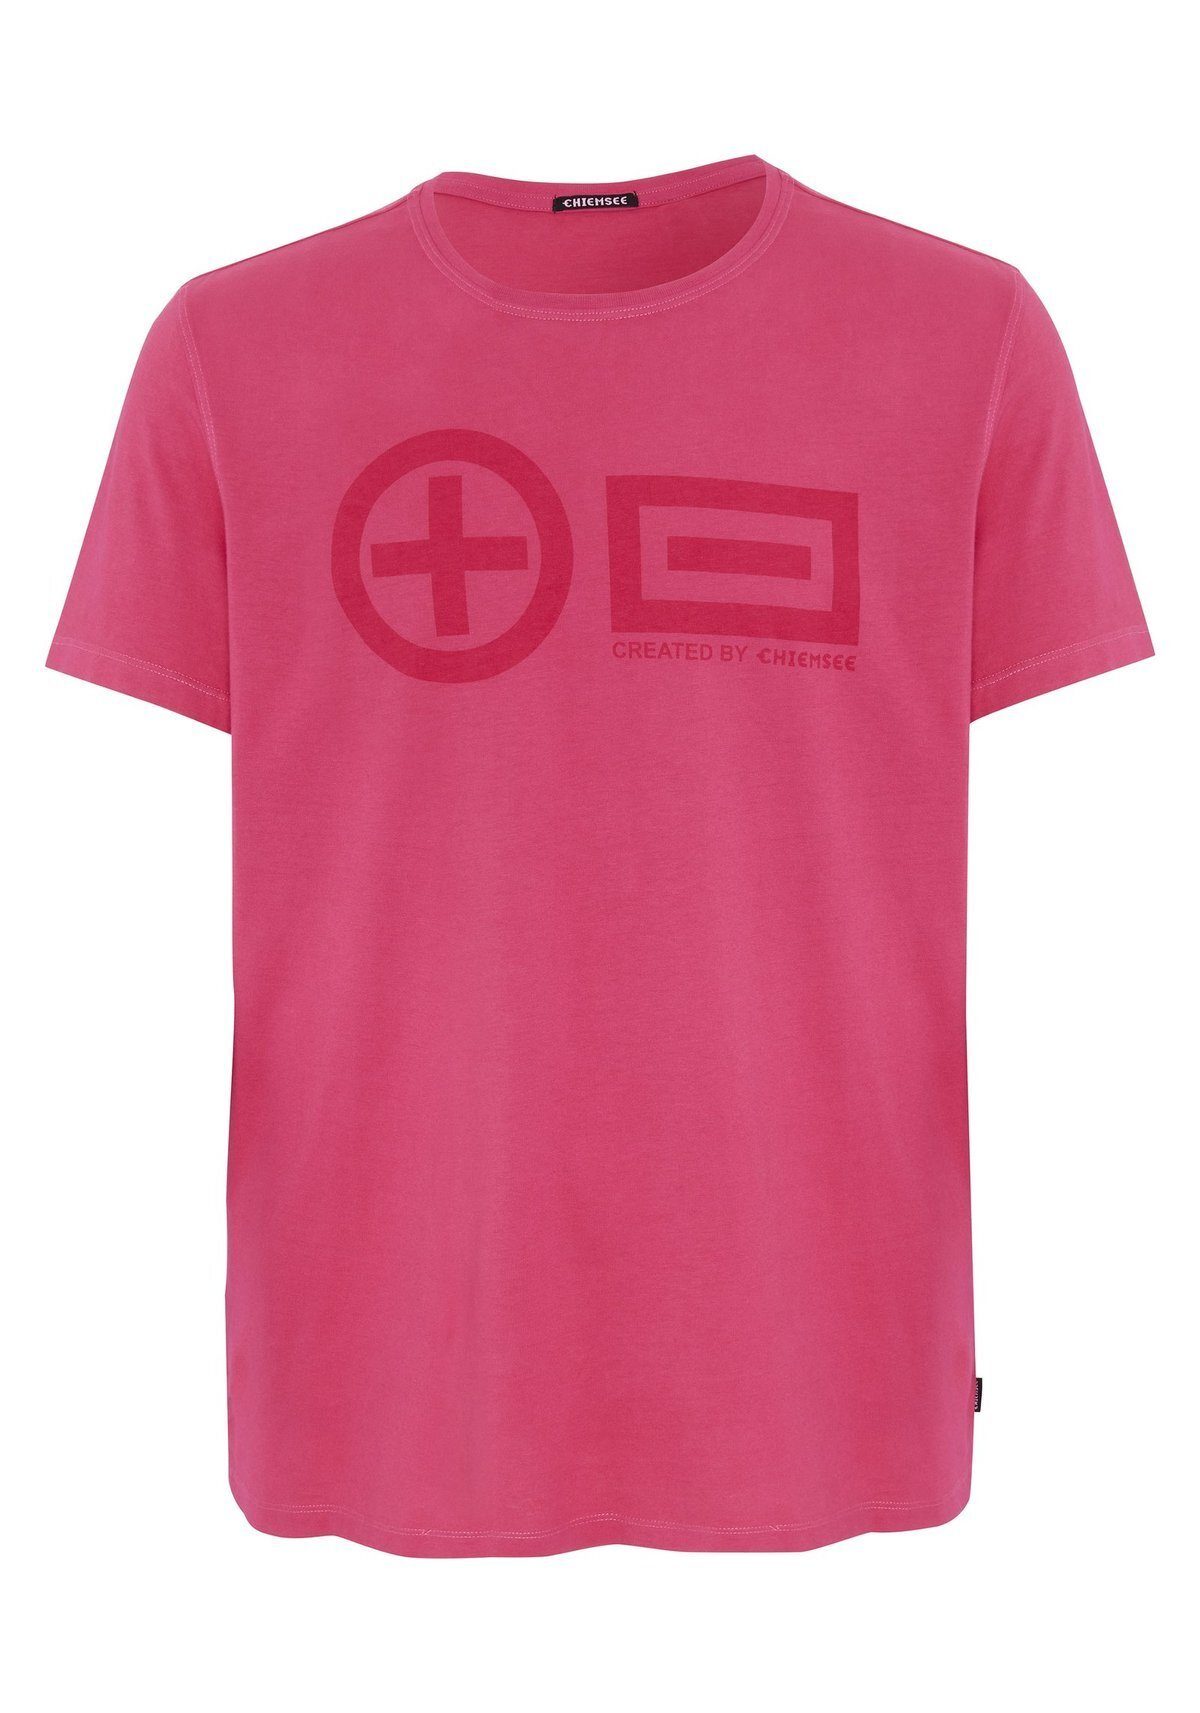 Chiemsee T-Shirt Herren T-Shirt - SABANG, Rundhals, Baumwolle Pink